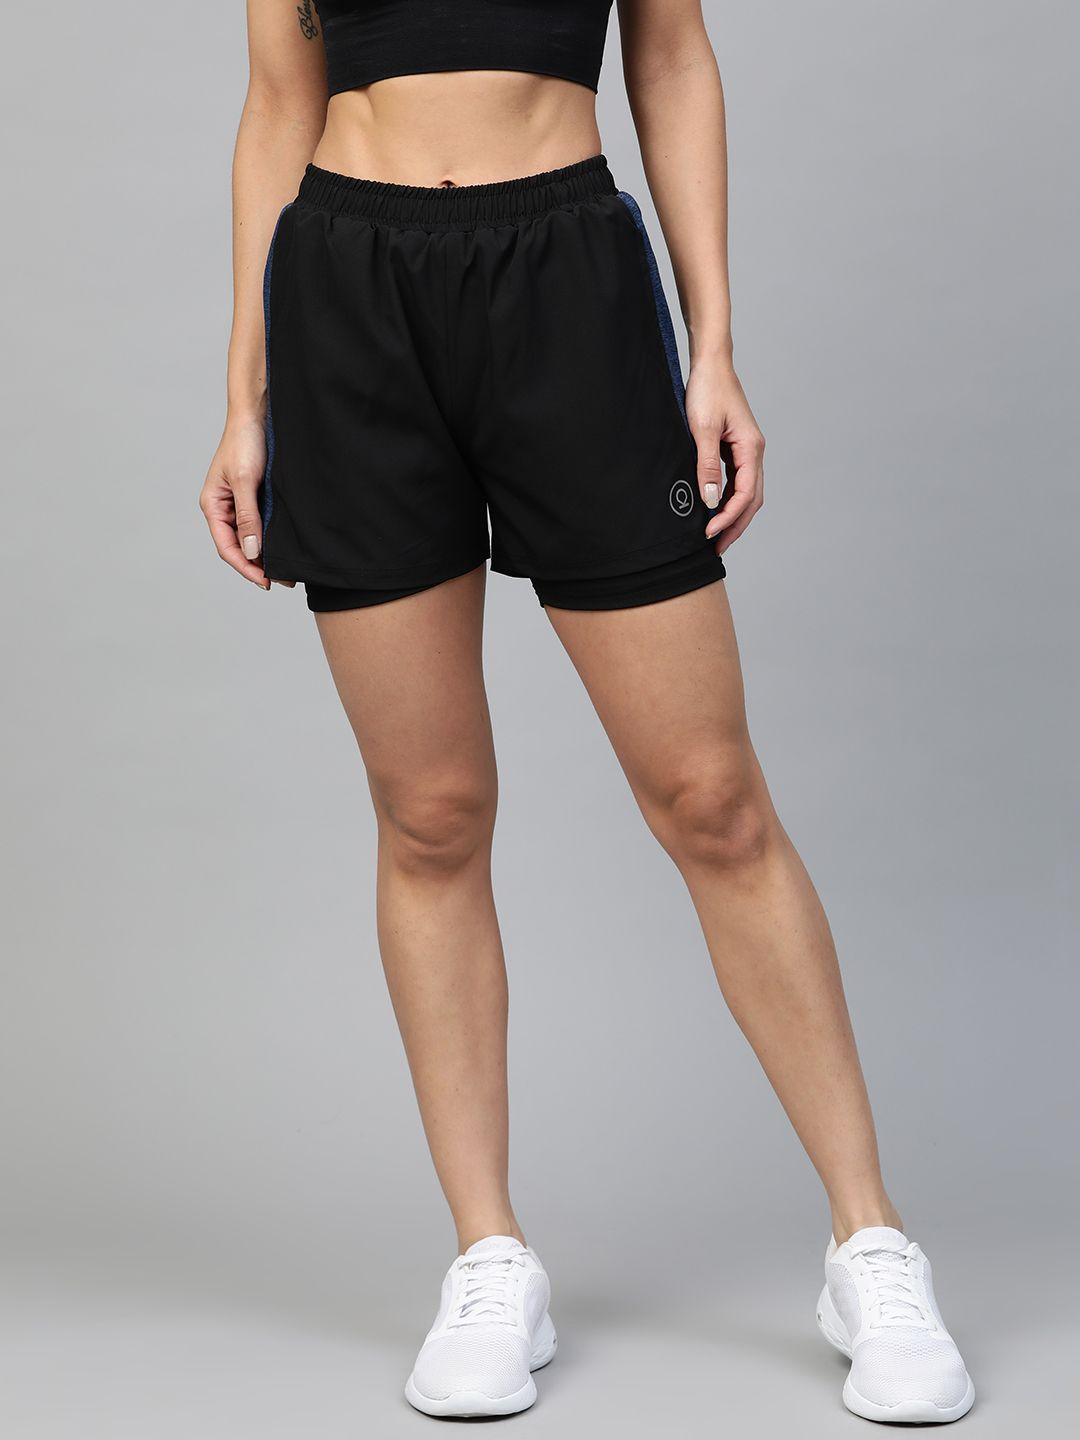 chkokko-women-black-side-panelled-regular-fit-double-layered-running-shorts